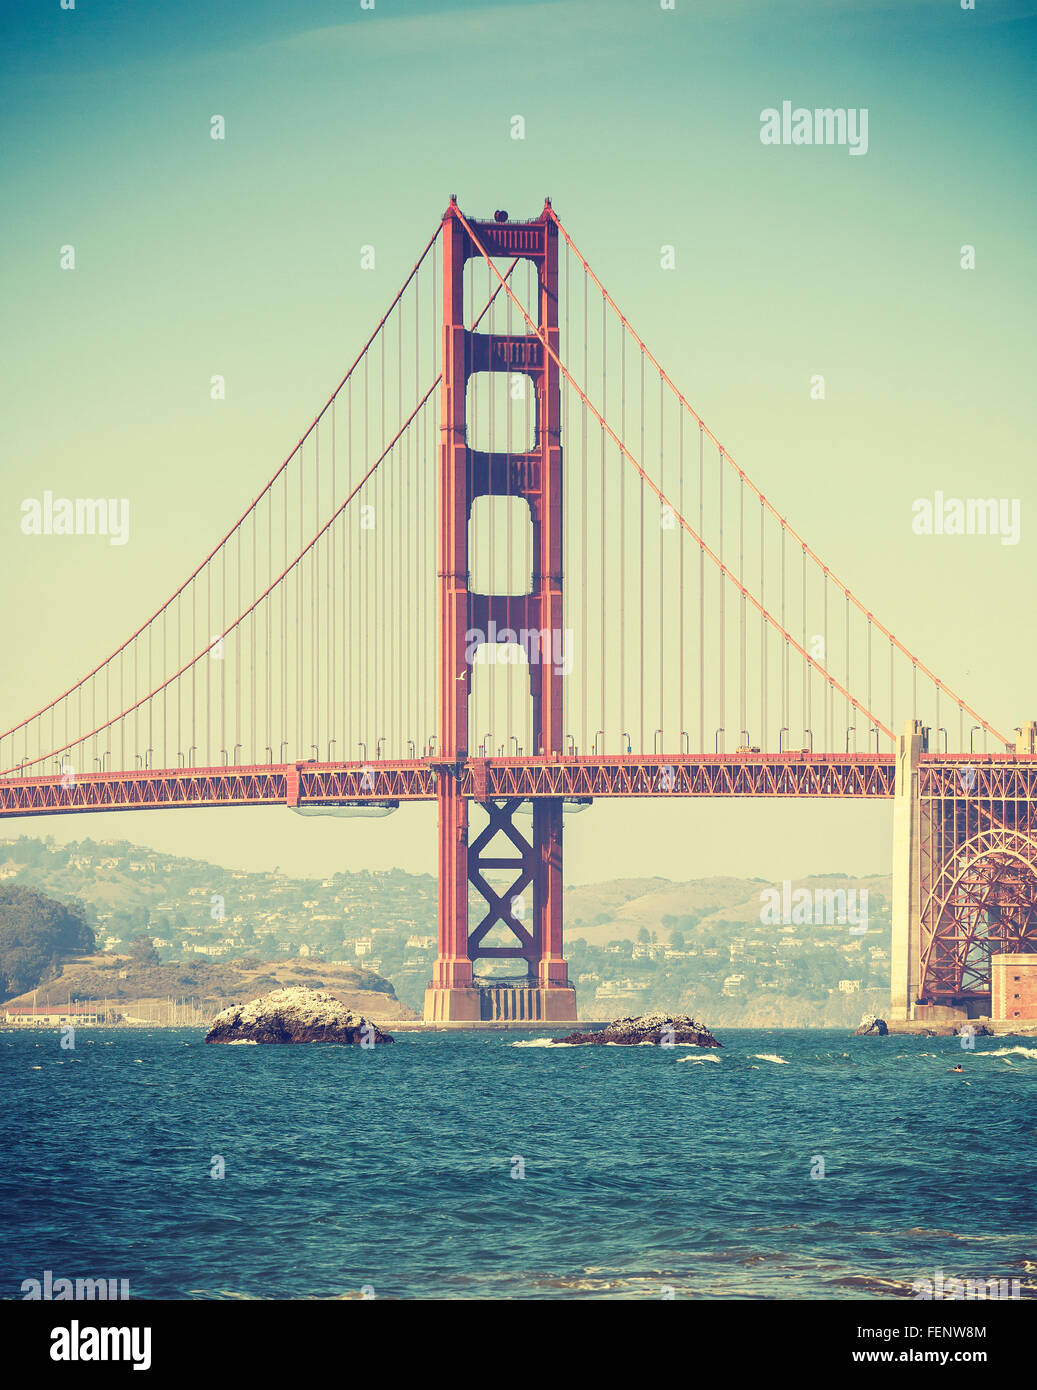 Old film retro style Golden Gate Bridge in San Francisco, USA. Stock Photo